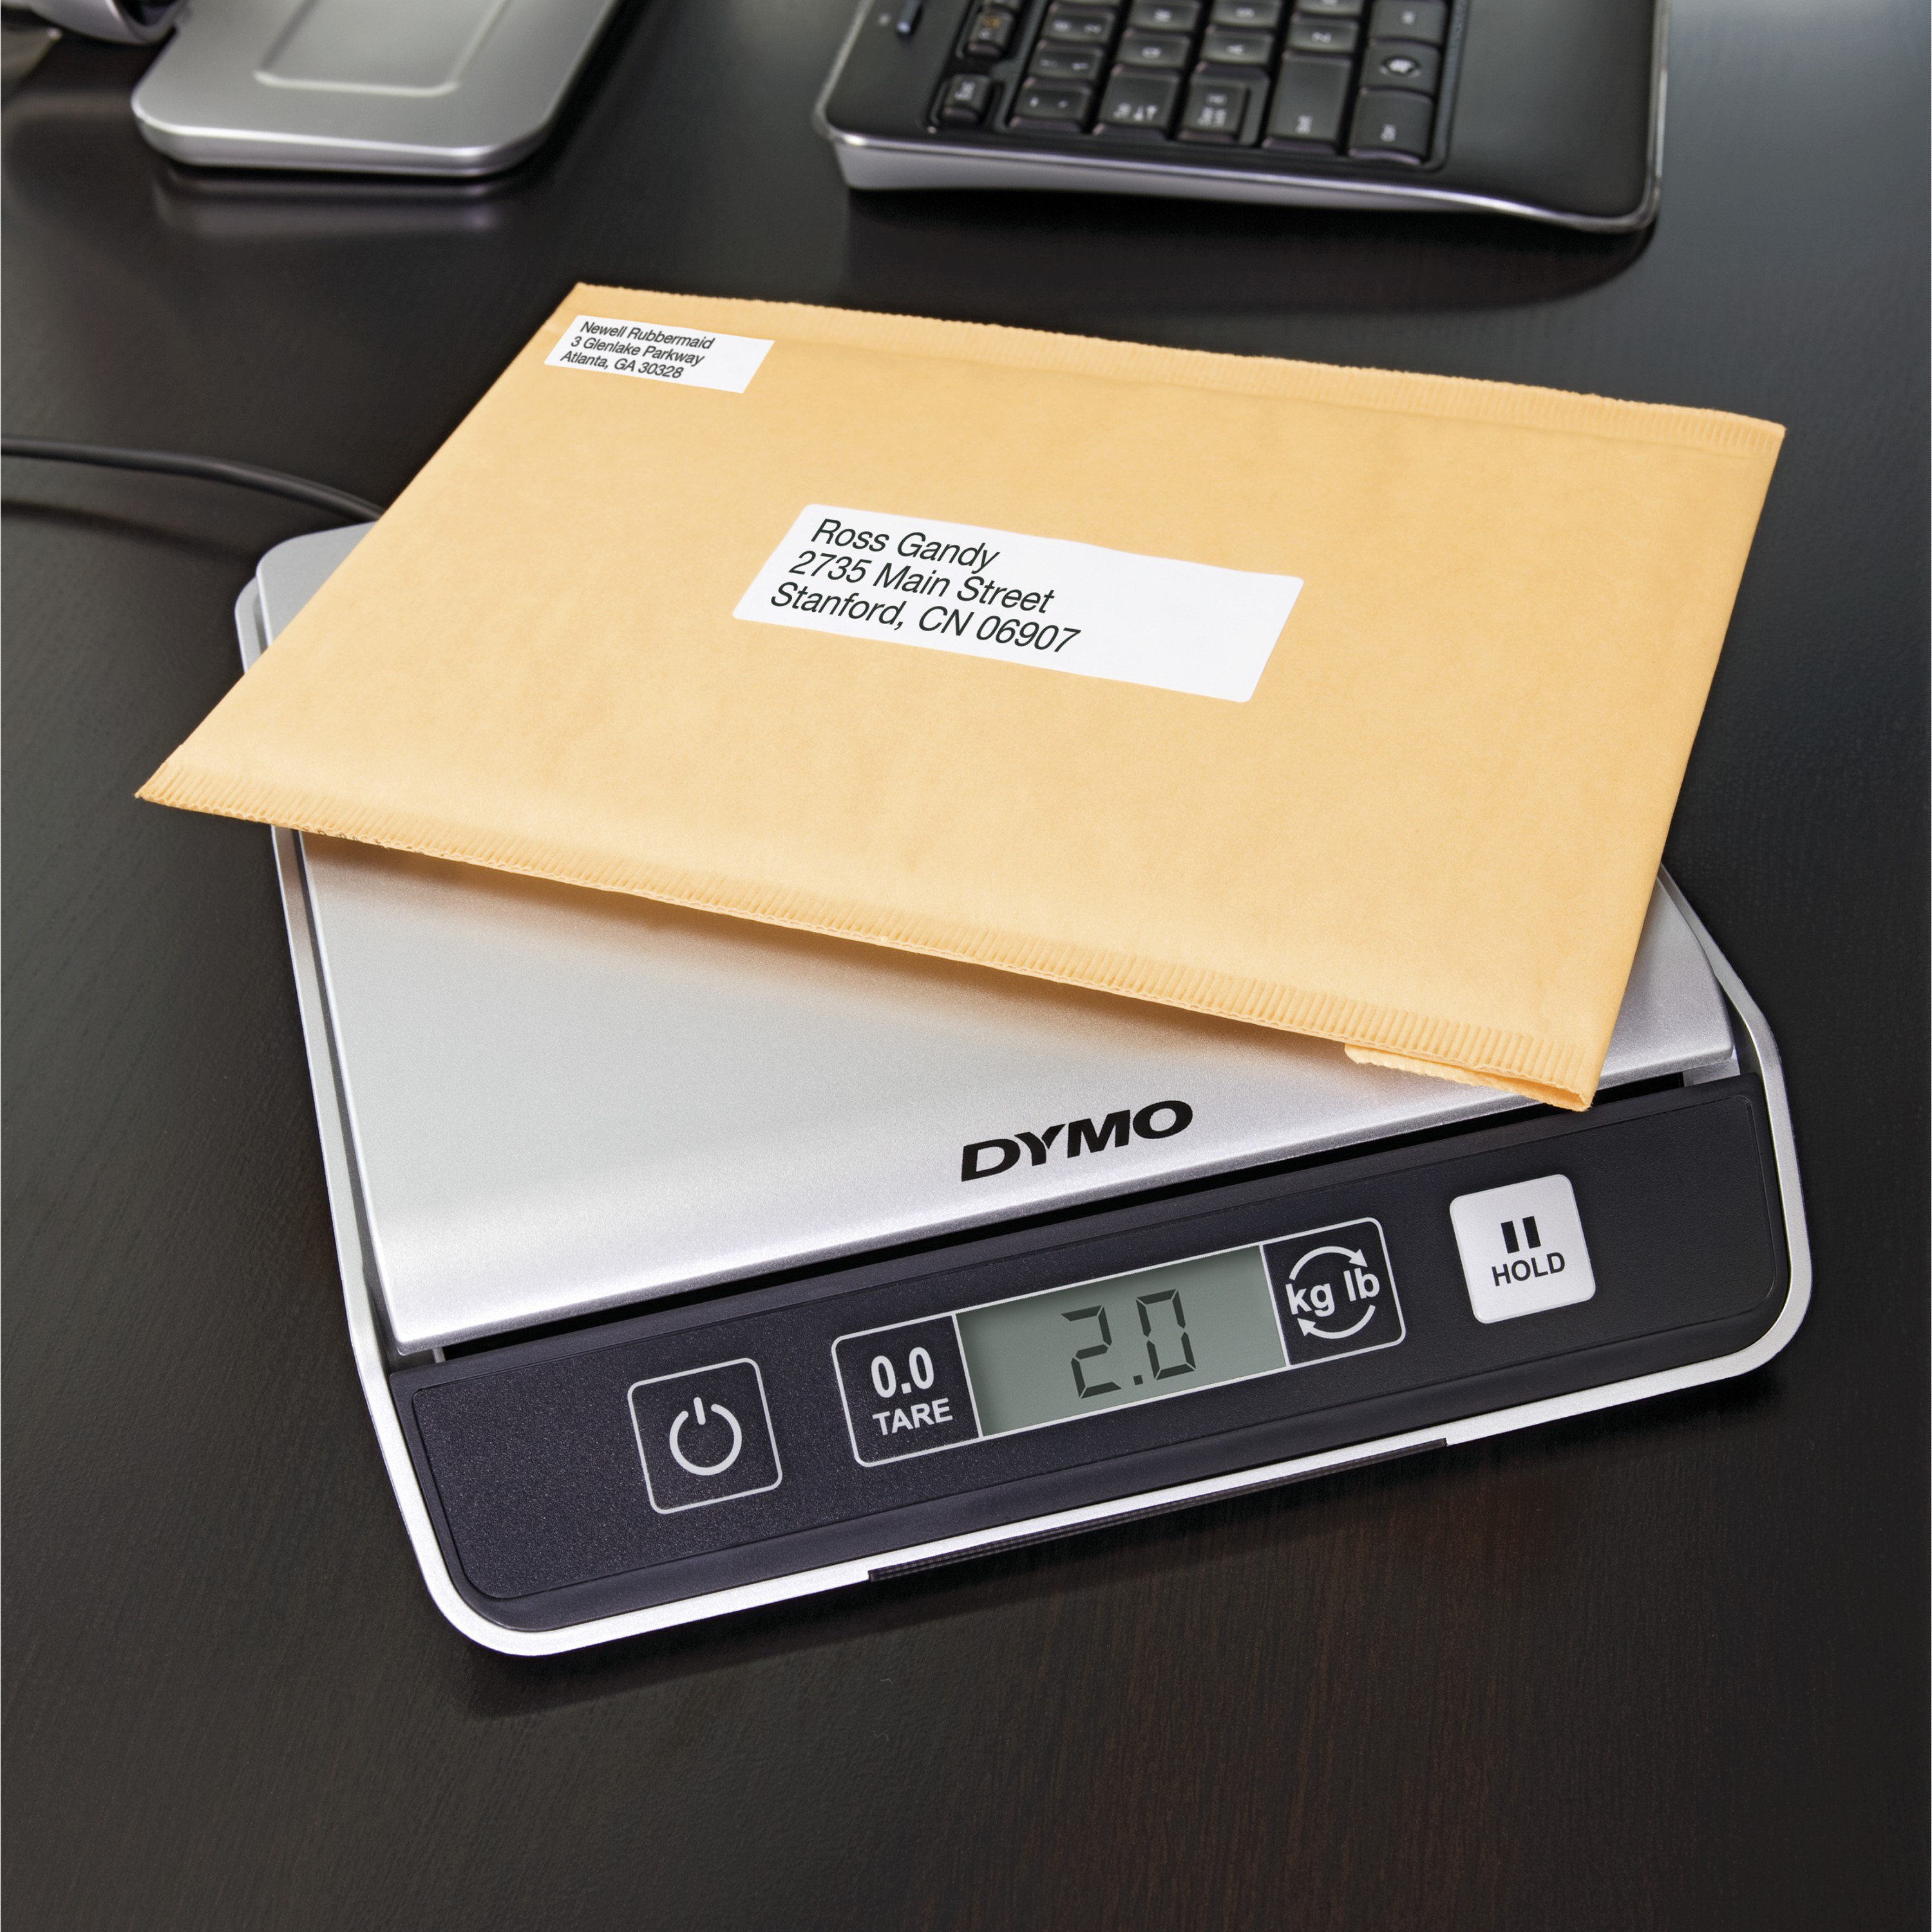 DYMO M25 Digital Postal Scale - Office Depot